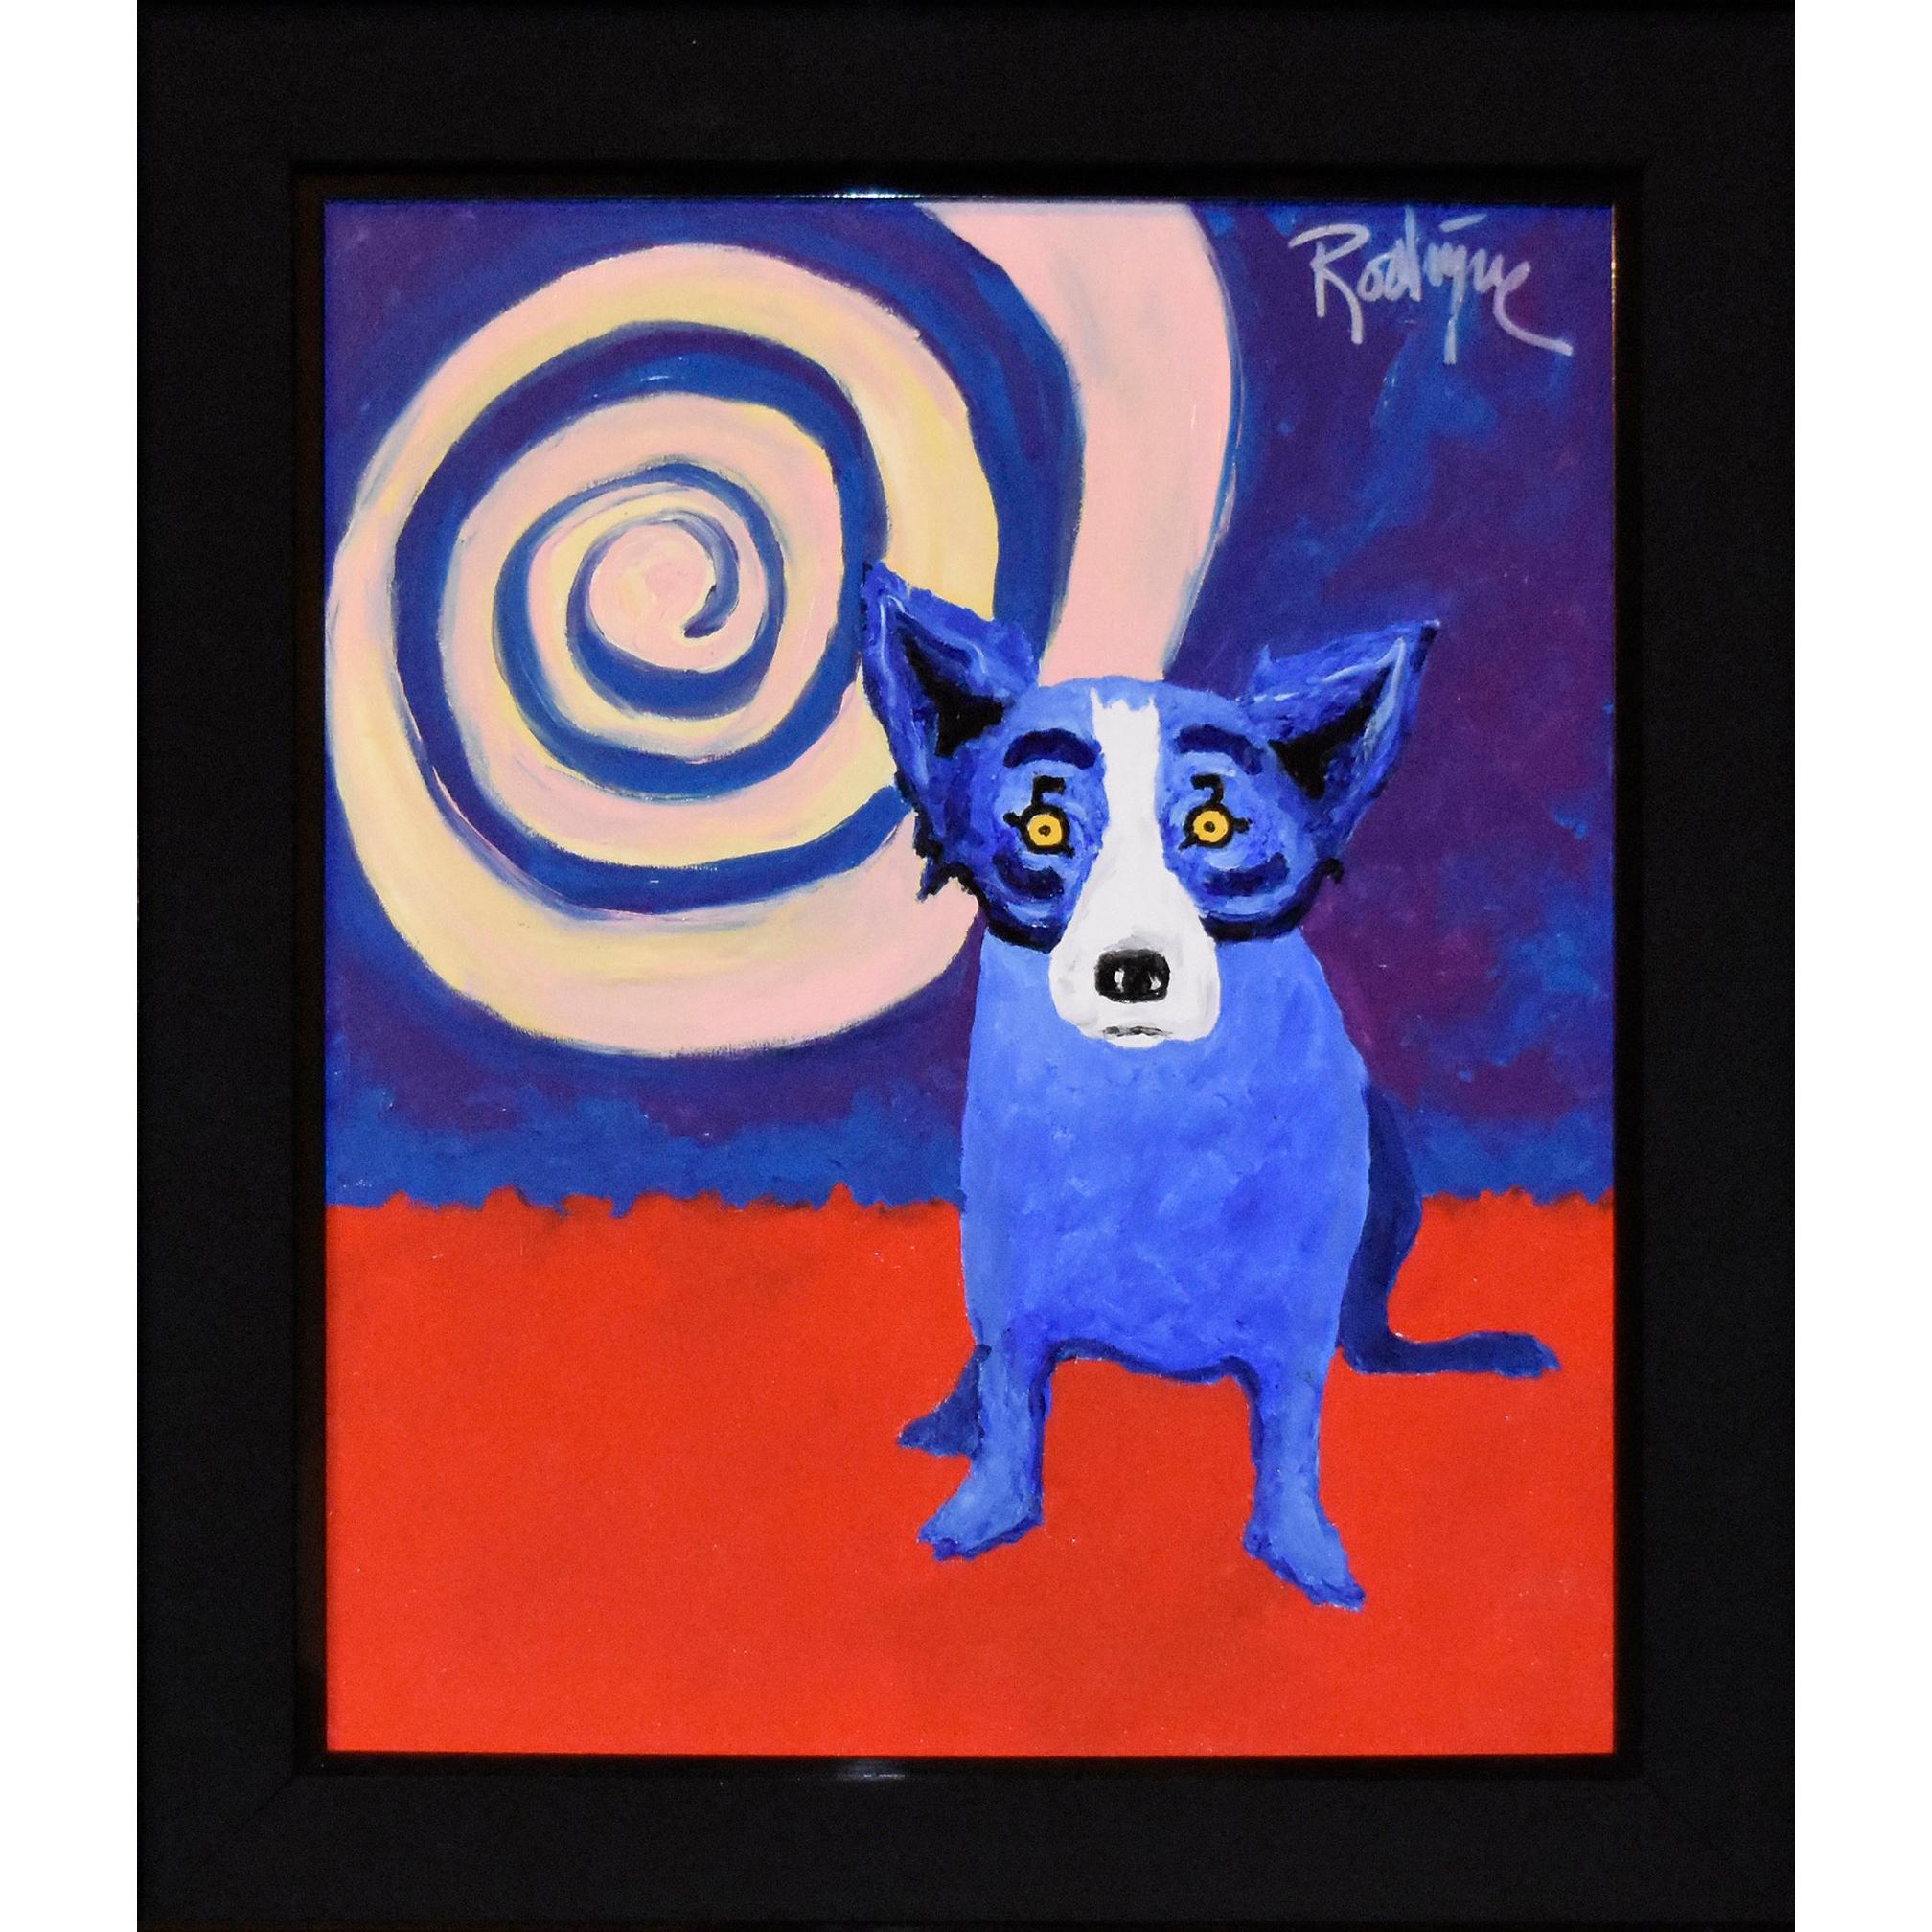 George Rodrigue  Blue Dog Rodigue, A Man and his Dog (ca. 1992